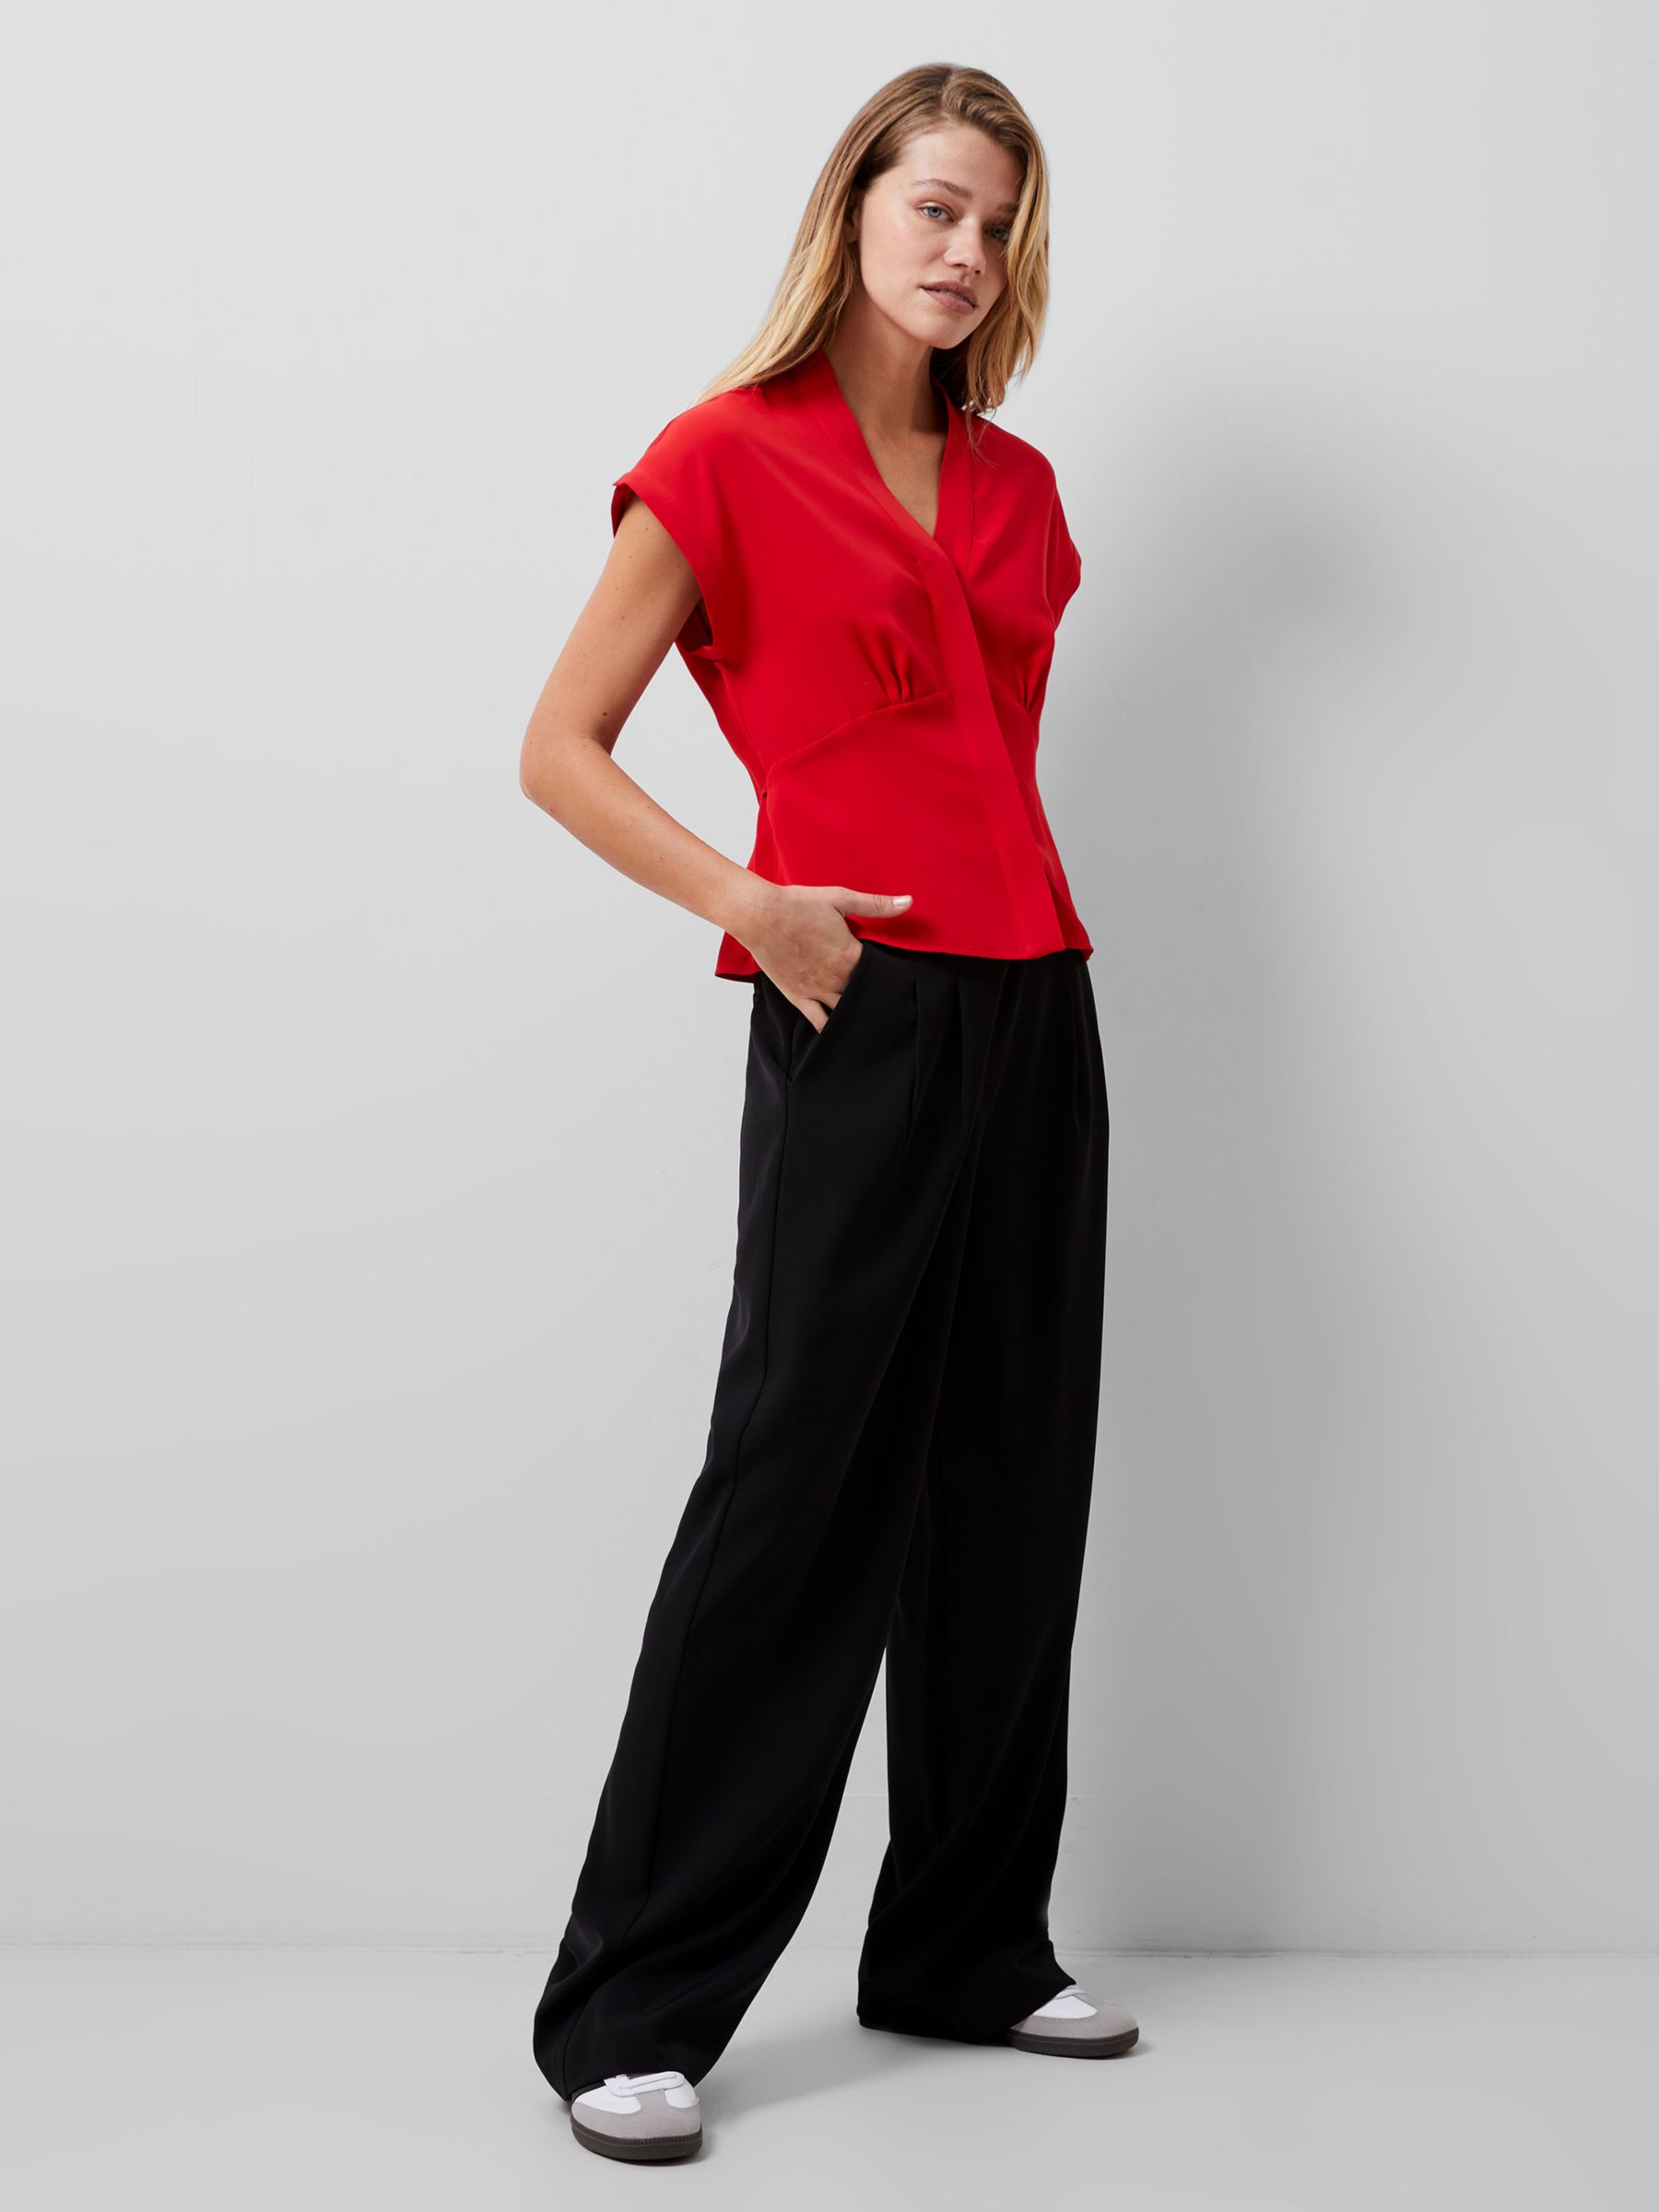 Tawny Brown Blouses for Women Business Causal Peplum Dressy Tops Ruffl –  Lookbook Store